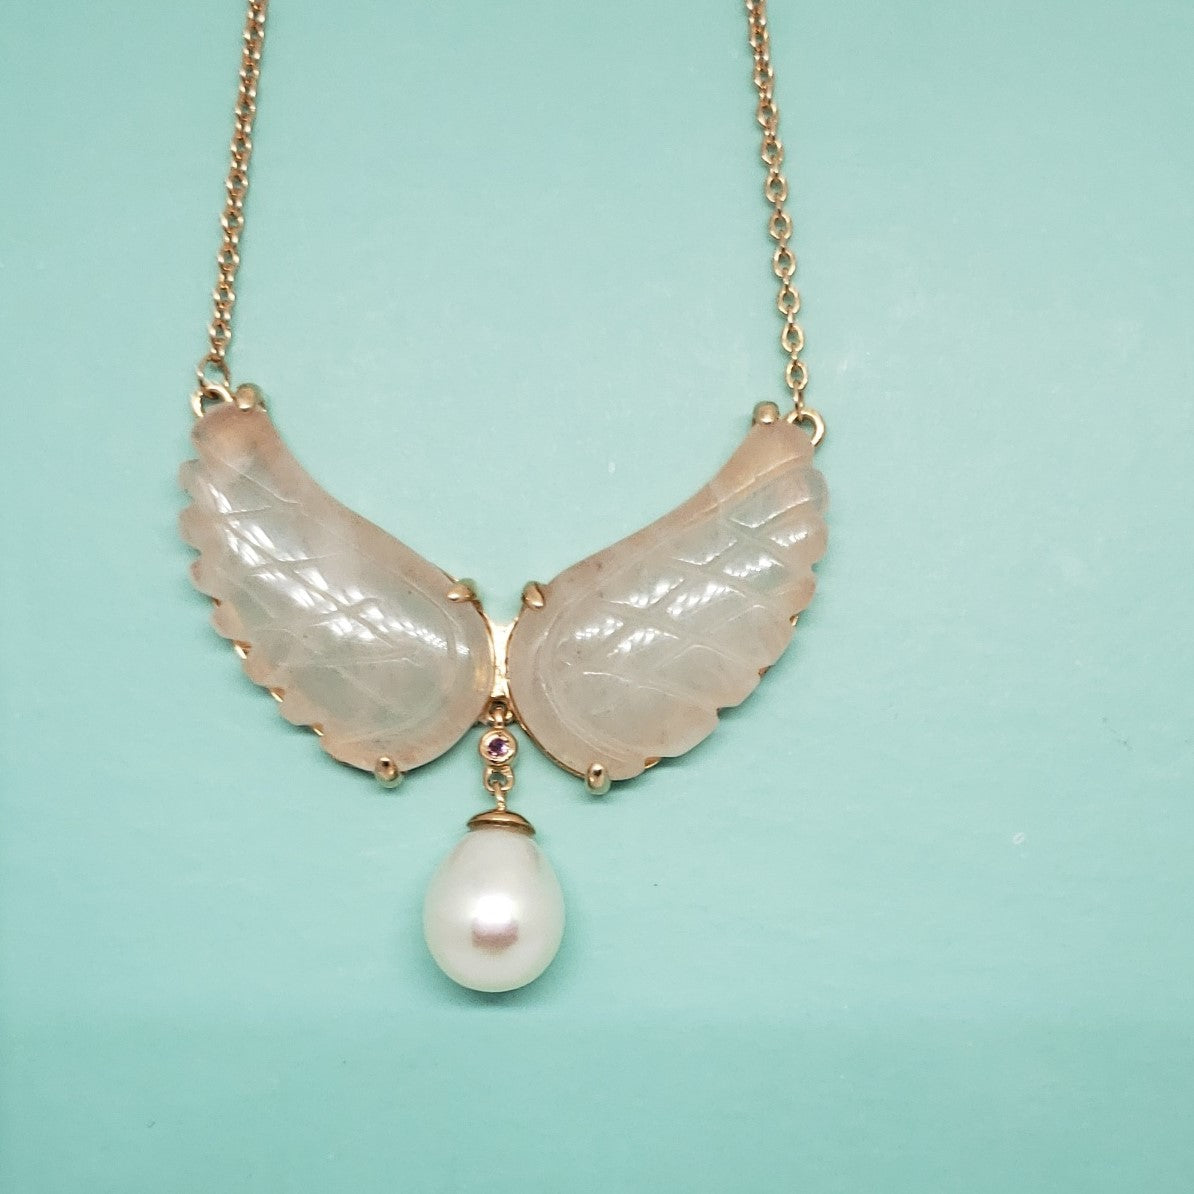 Angel Wings Galilea Rose Quartz, Freshwater Pearl, Orissa Rhodolite Garnet 14K RG Over Sterling Silver Drop Necklace (18 in) TGW 22.58 cts. - Houzz of DVA Boutique